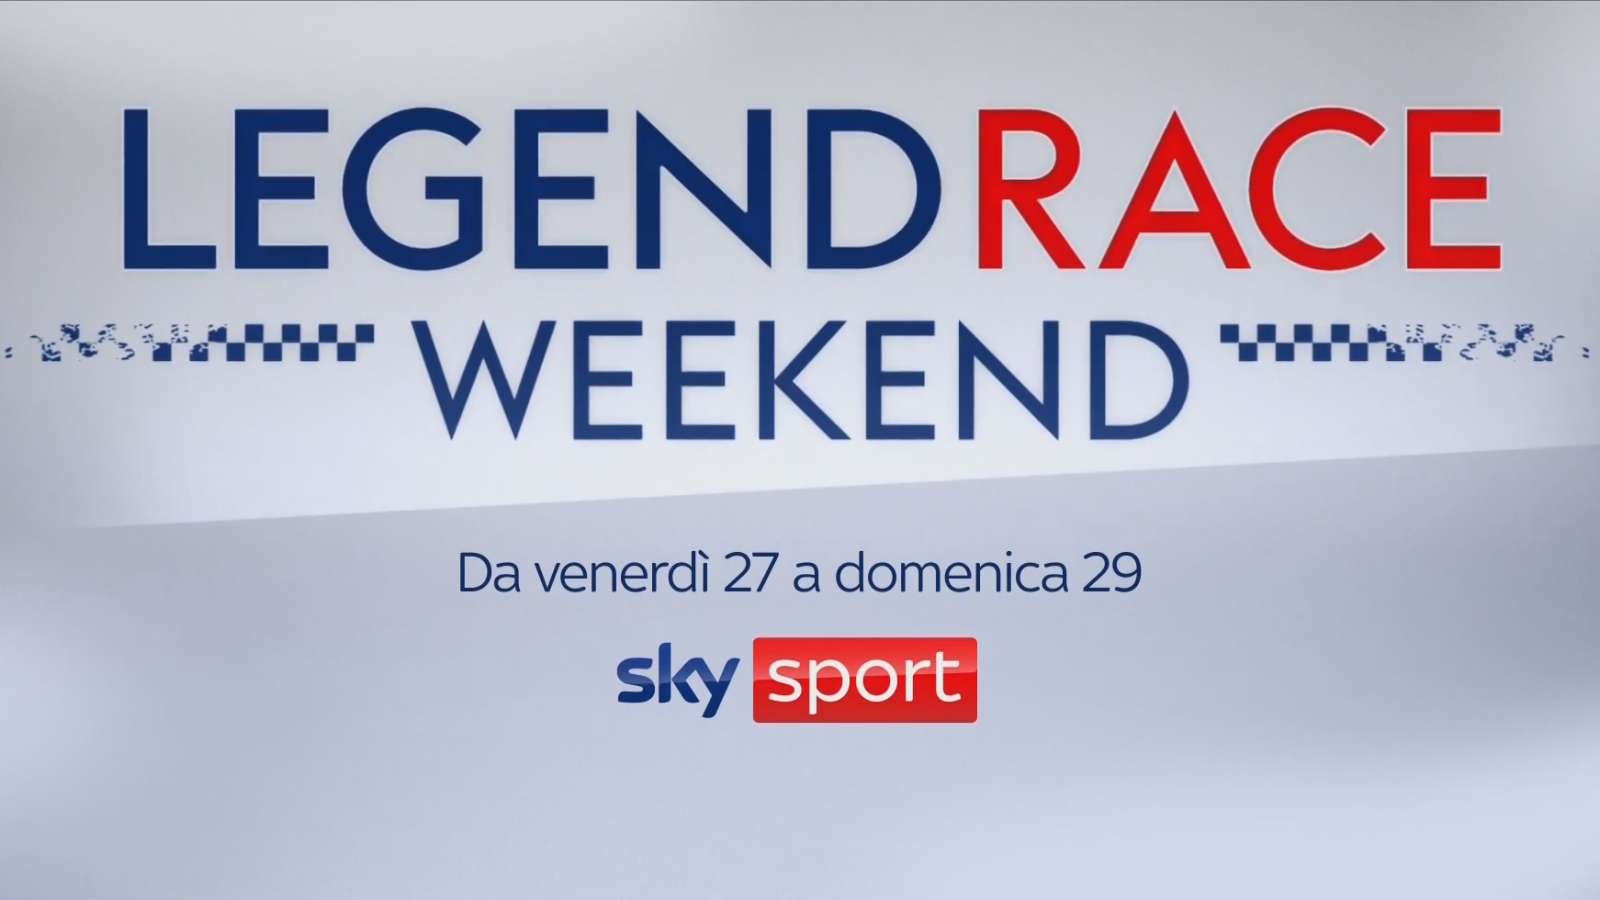 Legend Race Weekend Sky Sport, MotoGp Mugello, F1 Monaco e 500 miglia Indianapolis